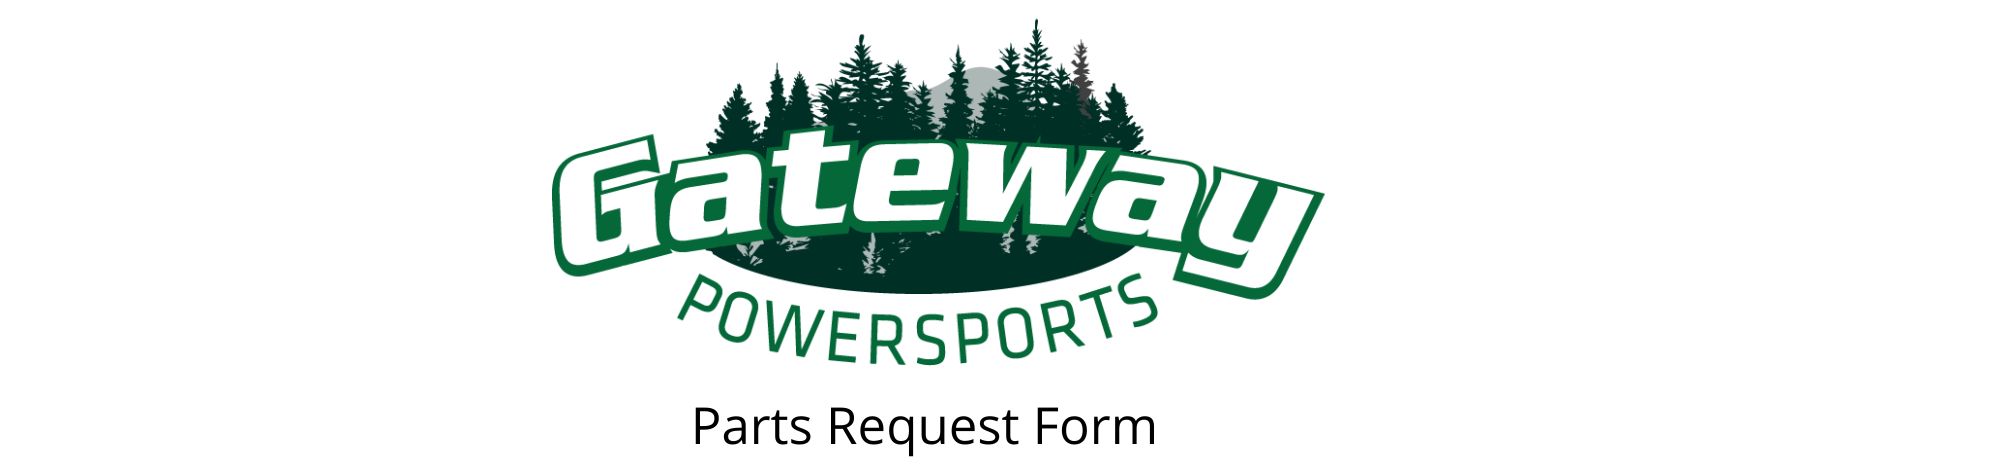 Gateway Powersports Parts Request